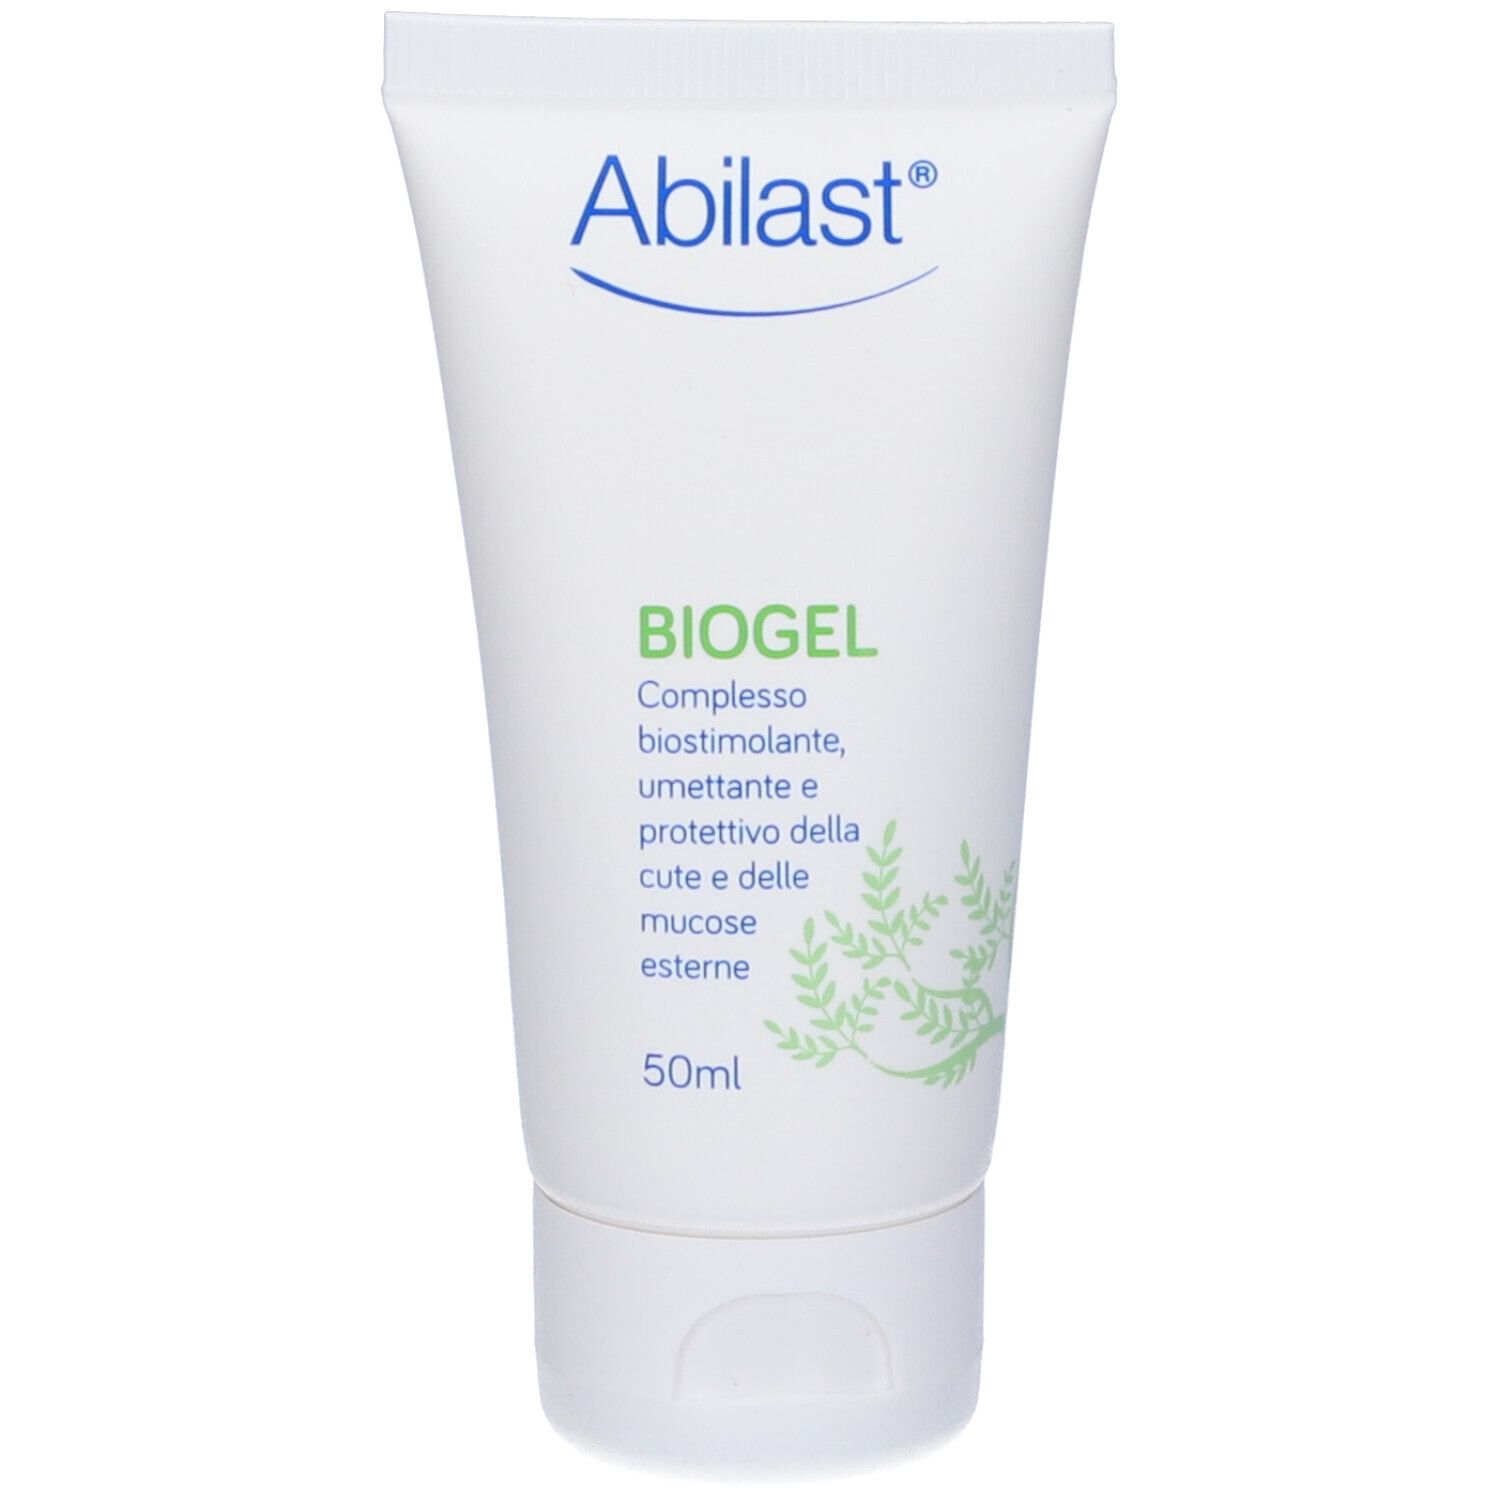 Image of Abilast® Biogel